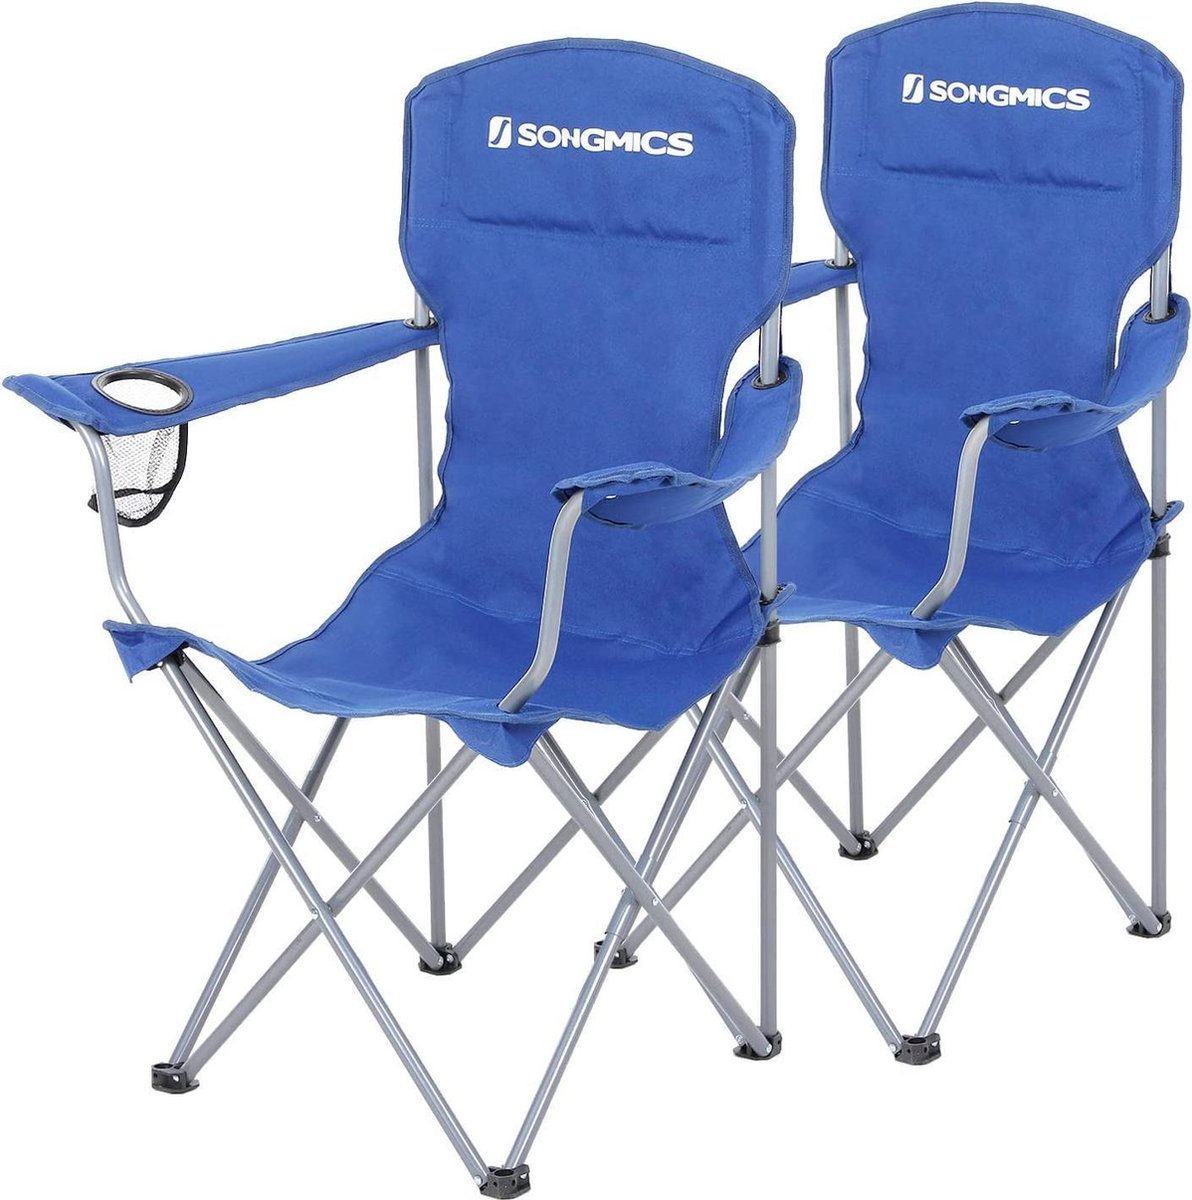 SONGMICS Campingstoel, set van 2, inklapbaar, comfortabel, klapstoel met robuust frame, belastbaar tot 150 kg, met flessenhouder, outdoor stoel, blauw GCB08BU, XL